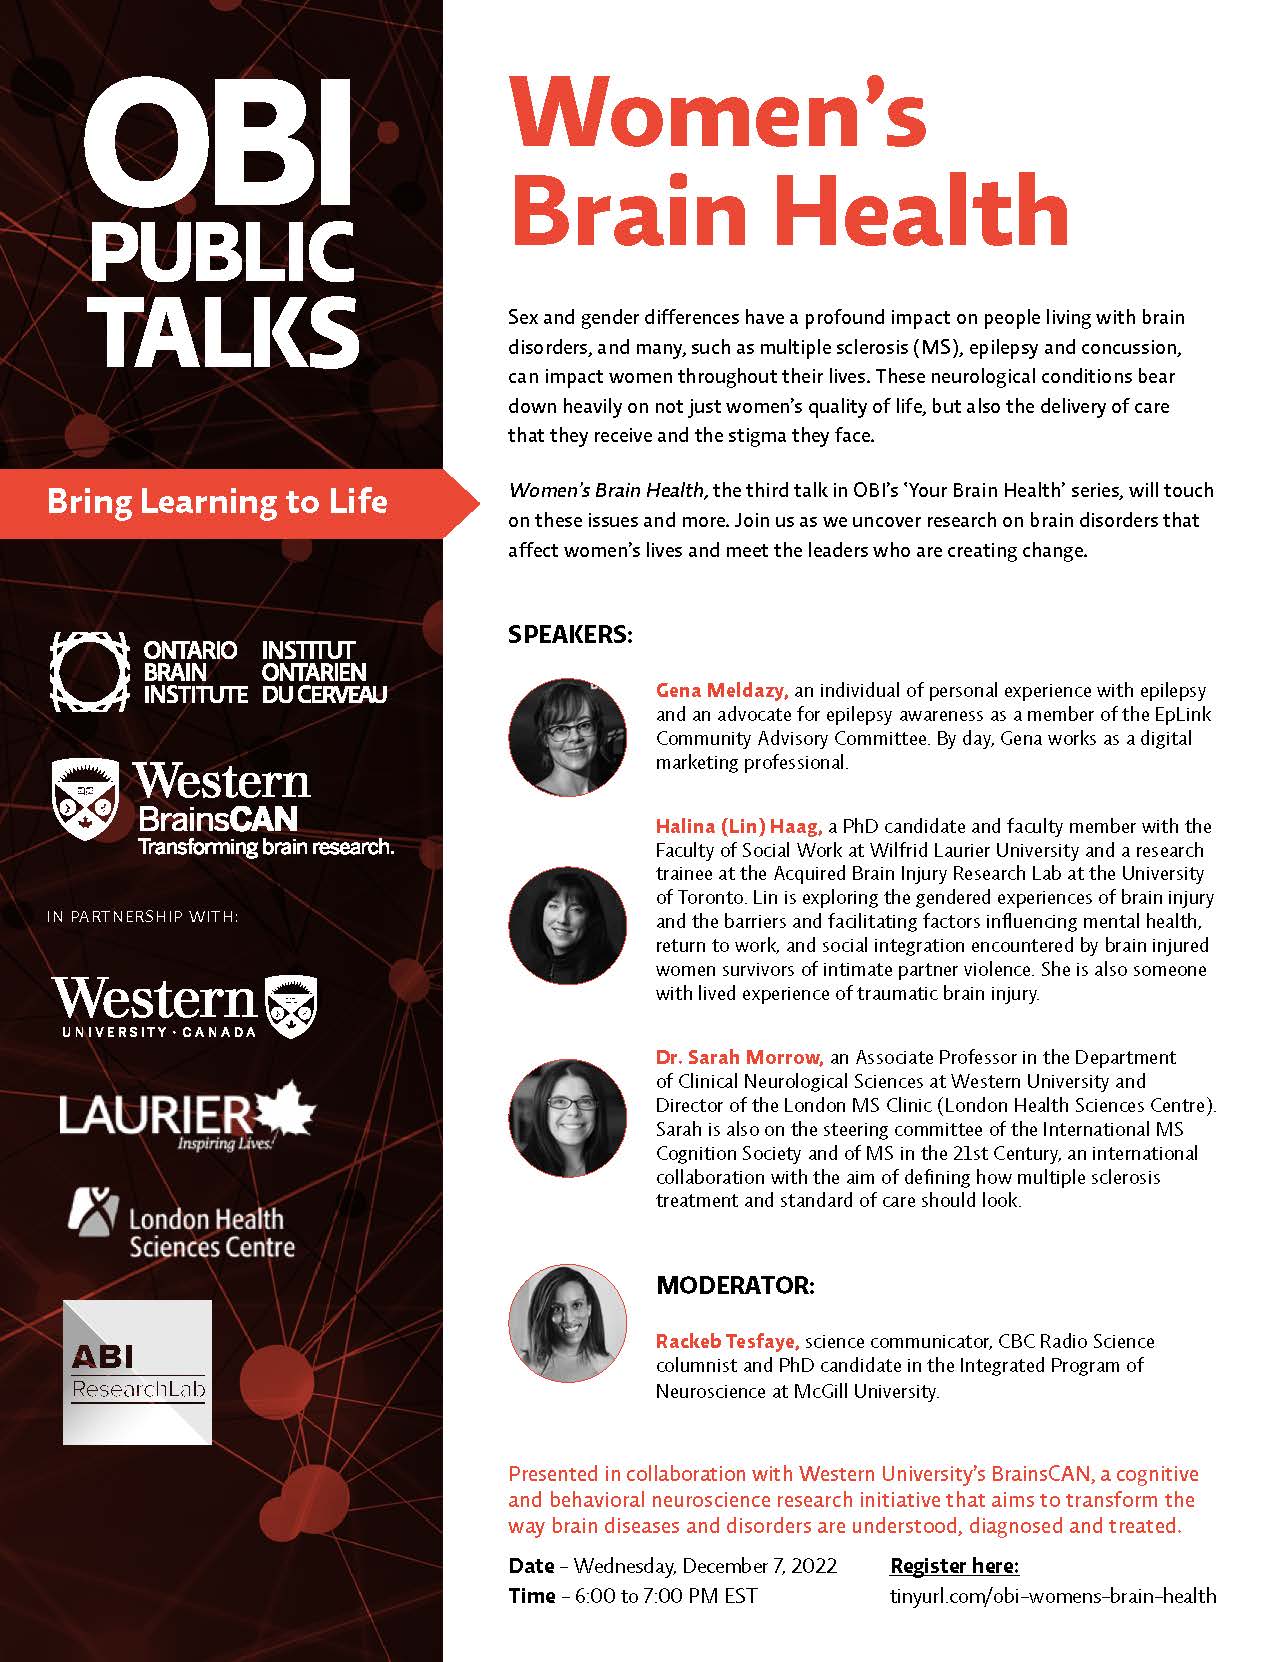 Your Brain Health Series: Women's Brain Health